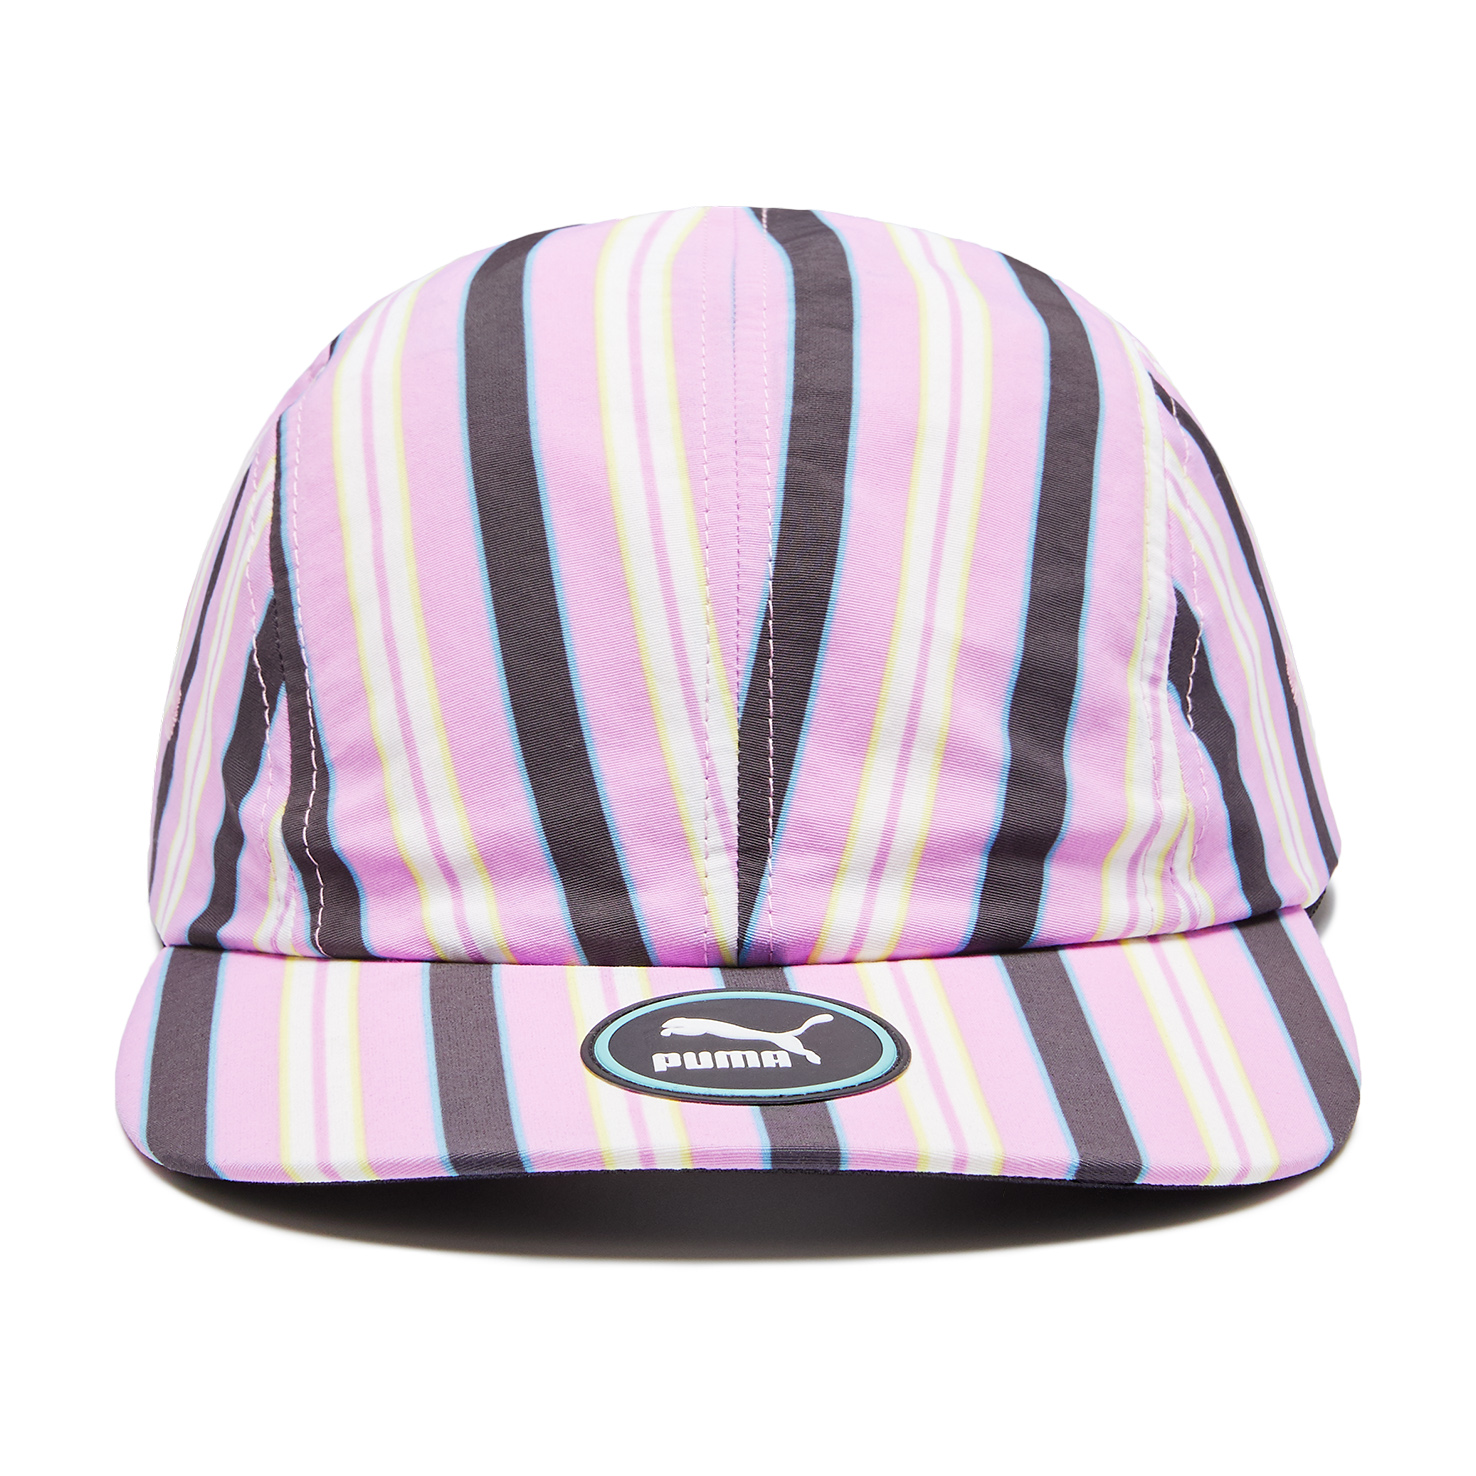 4-PANEL CAP PUMA, размер Один размер, цвет розовый PM023684 - фото 4